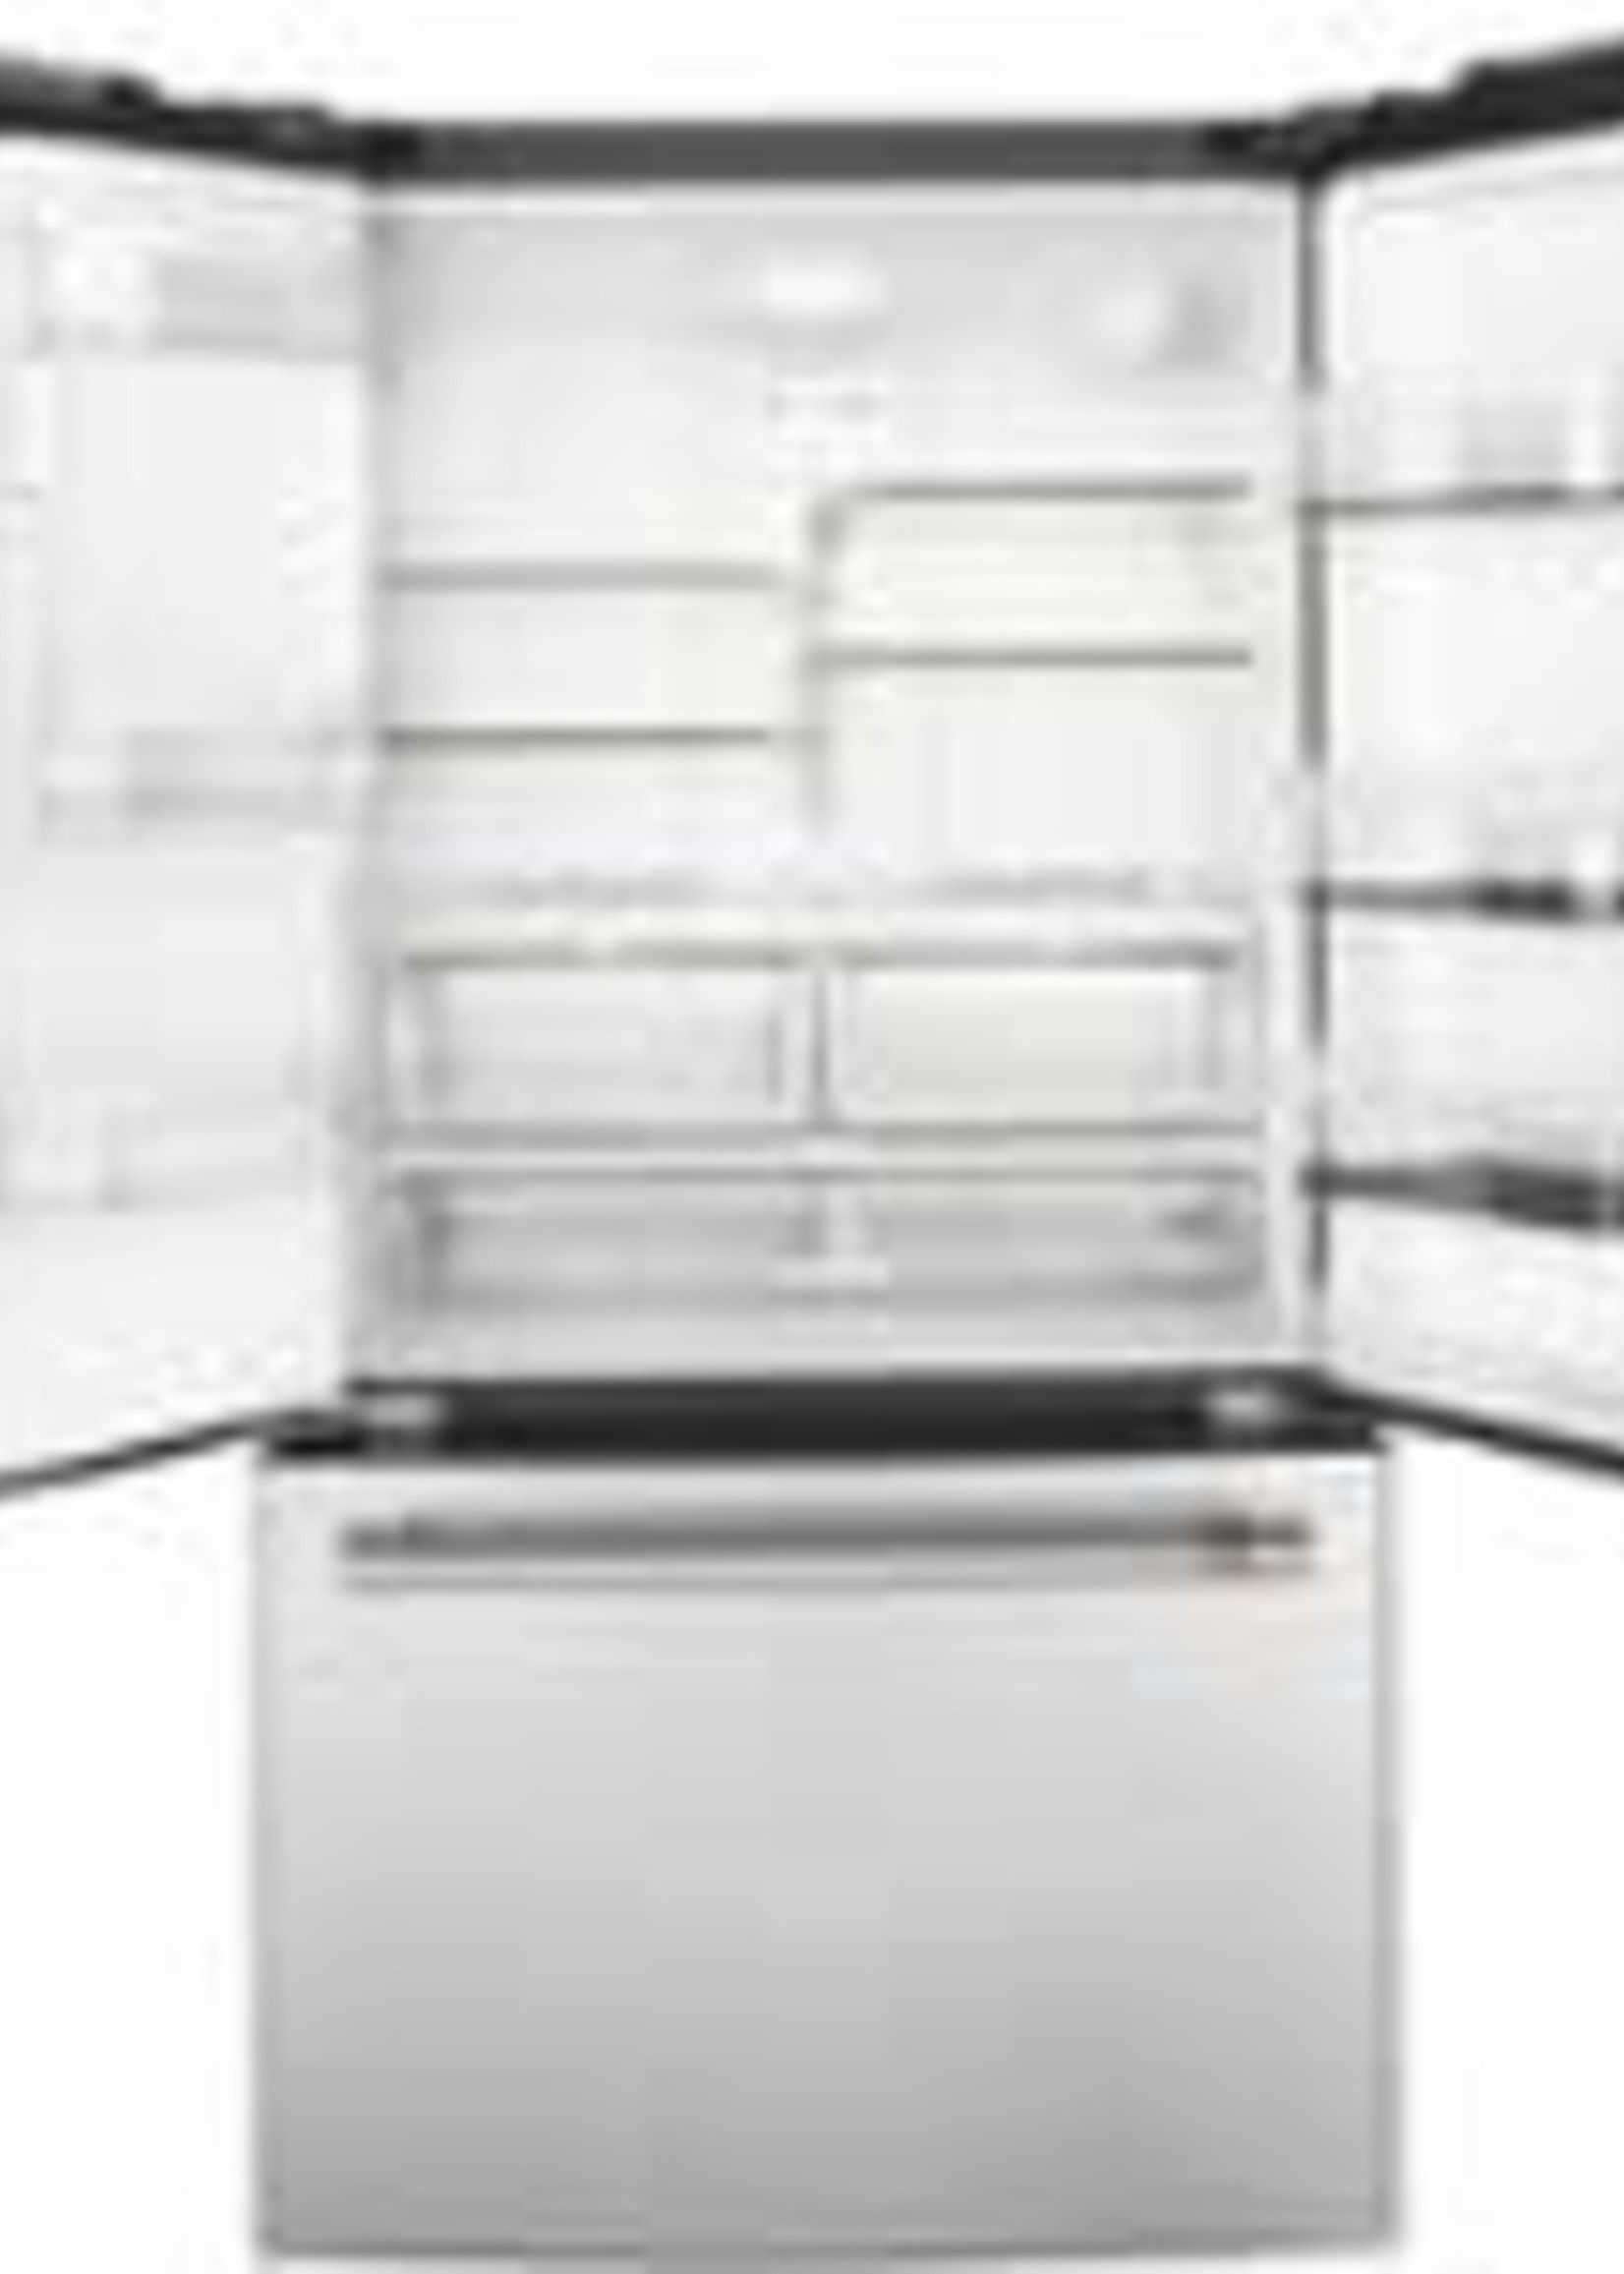 *Café  CFE26KP2NNS    25.6 Cu. Ft. French Door Refrigerator - Stainless steel